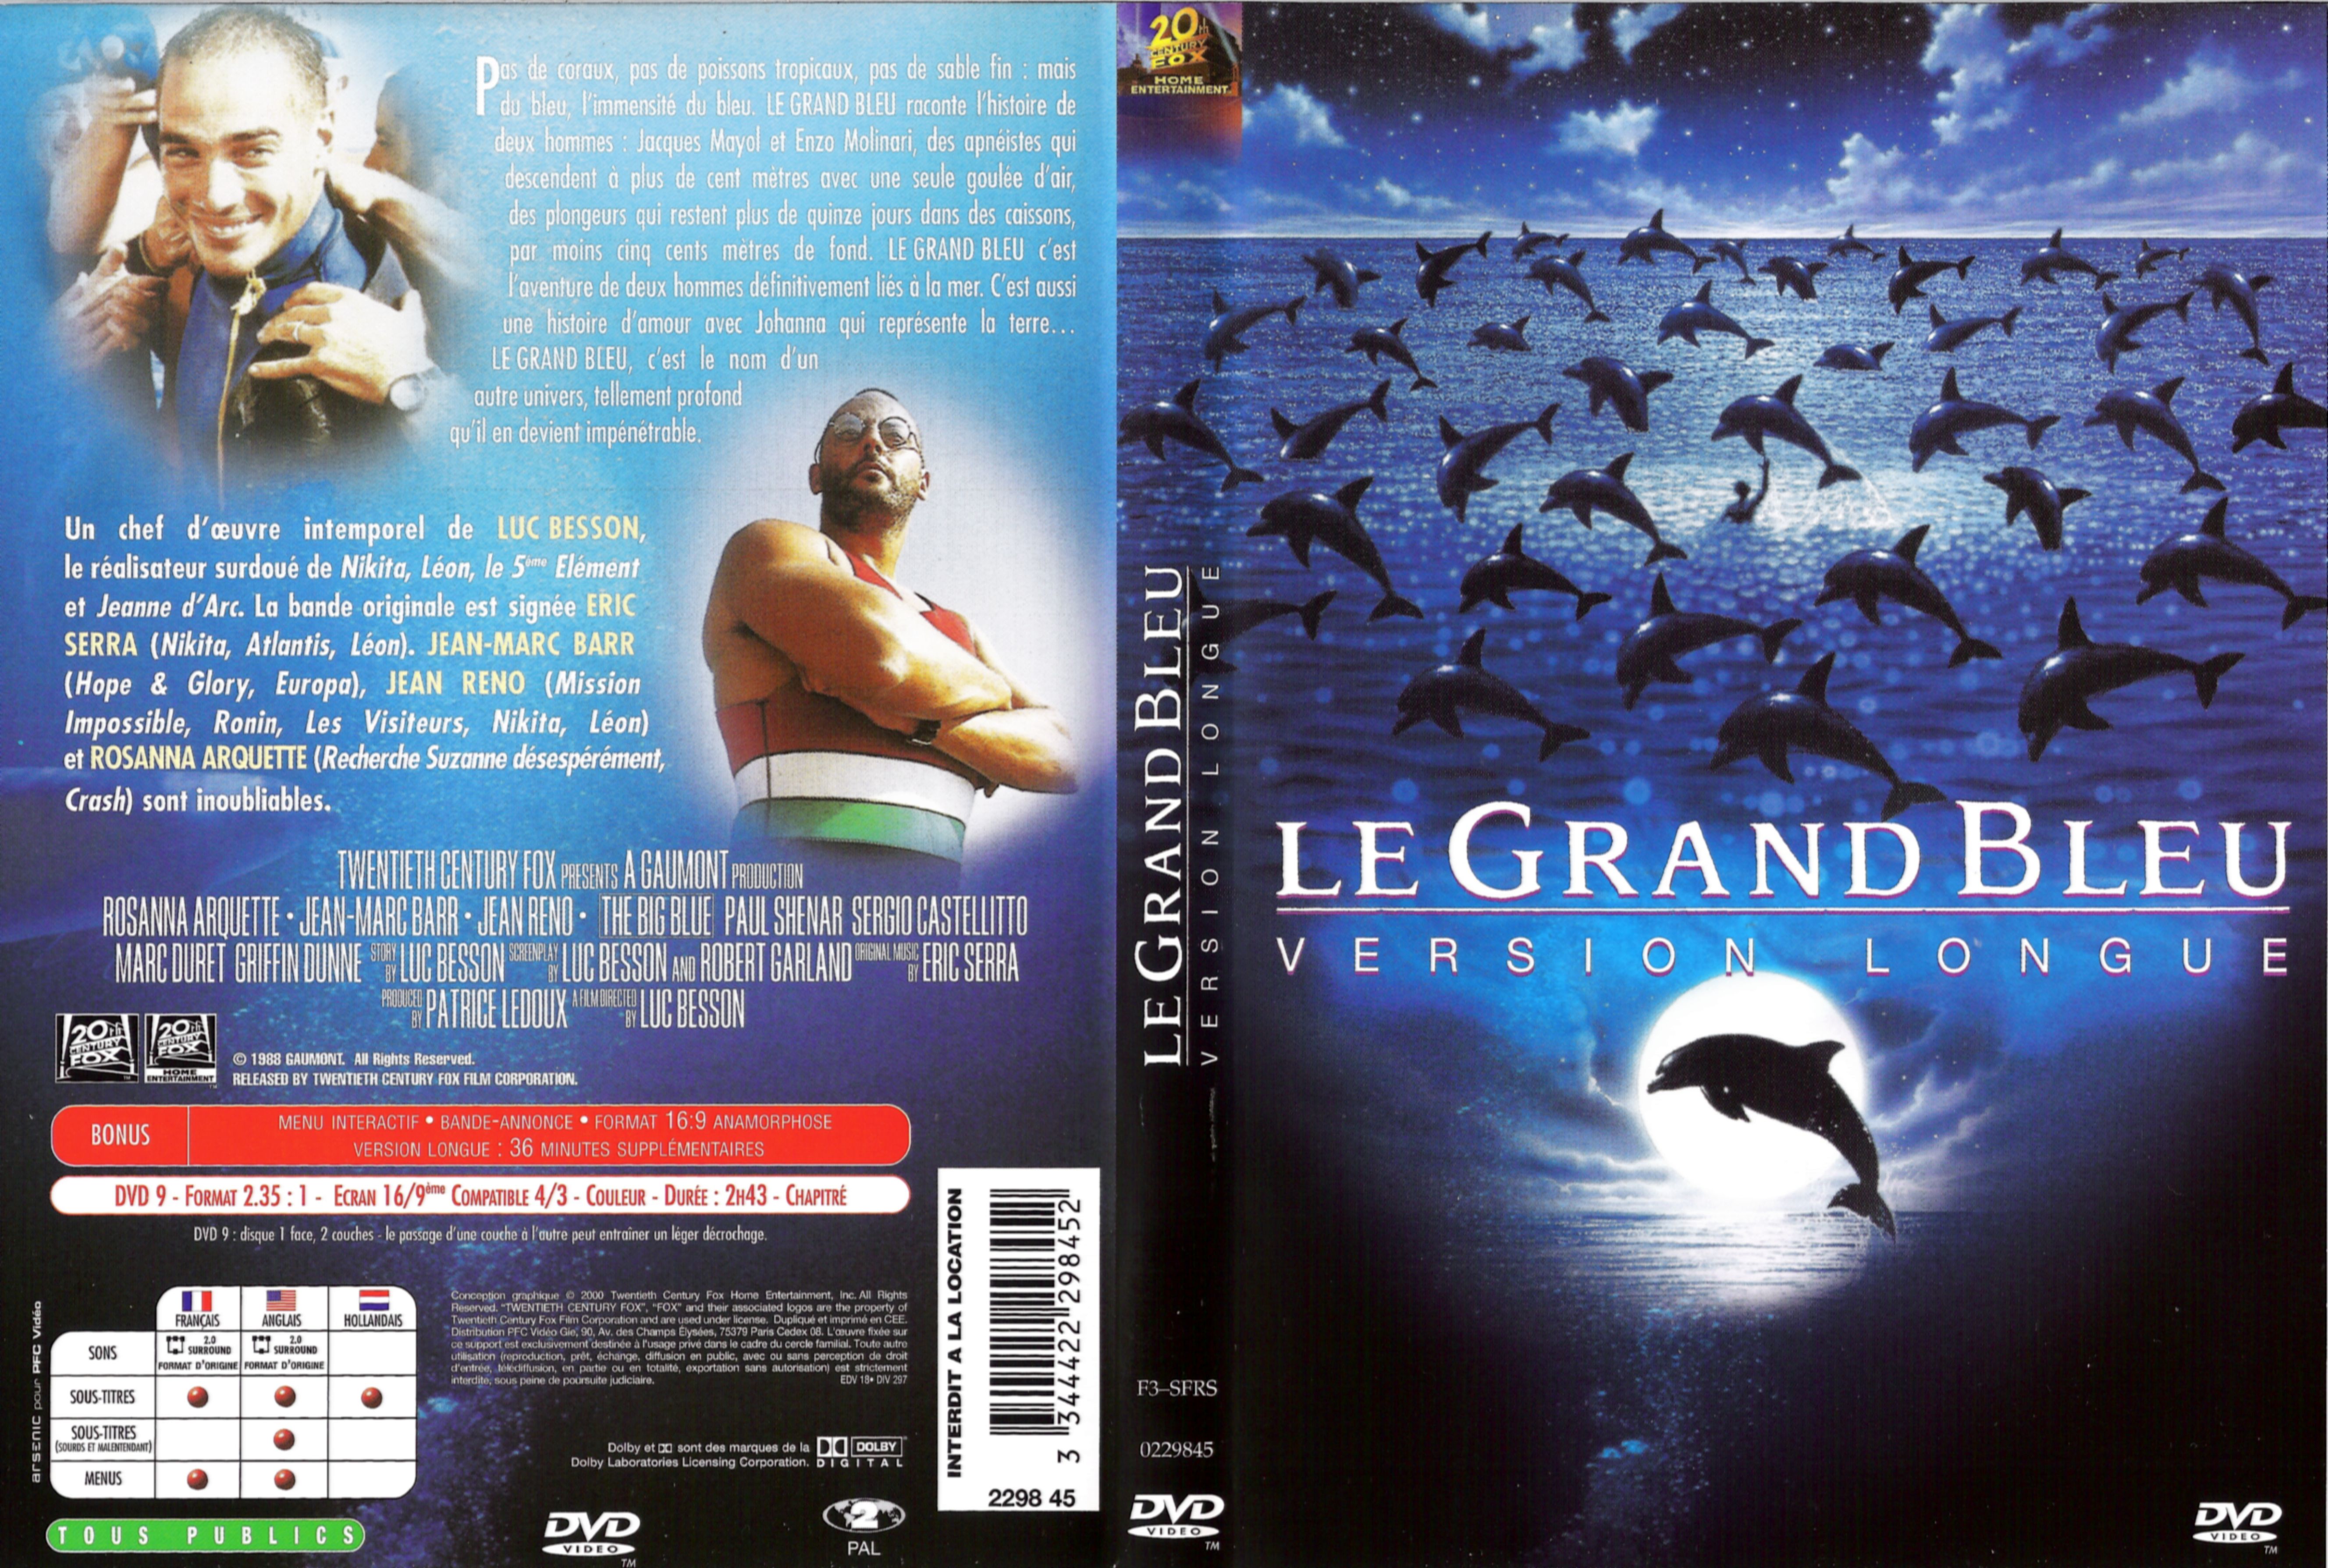 Jaquette DVD Le grand bleu v2